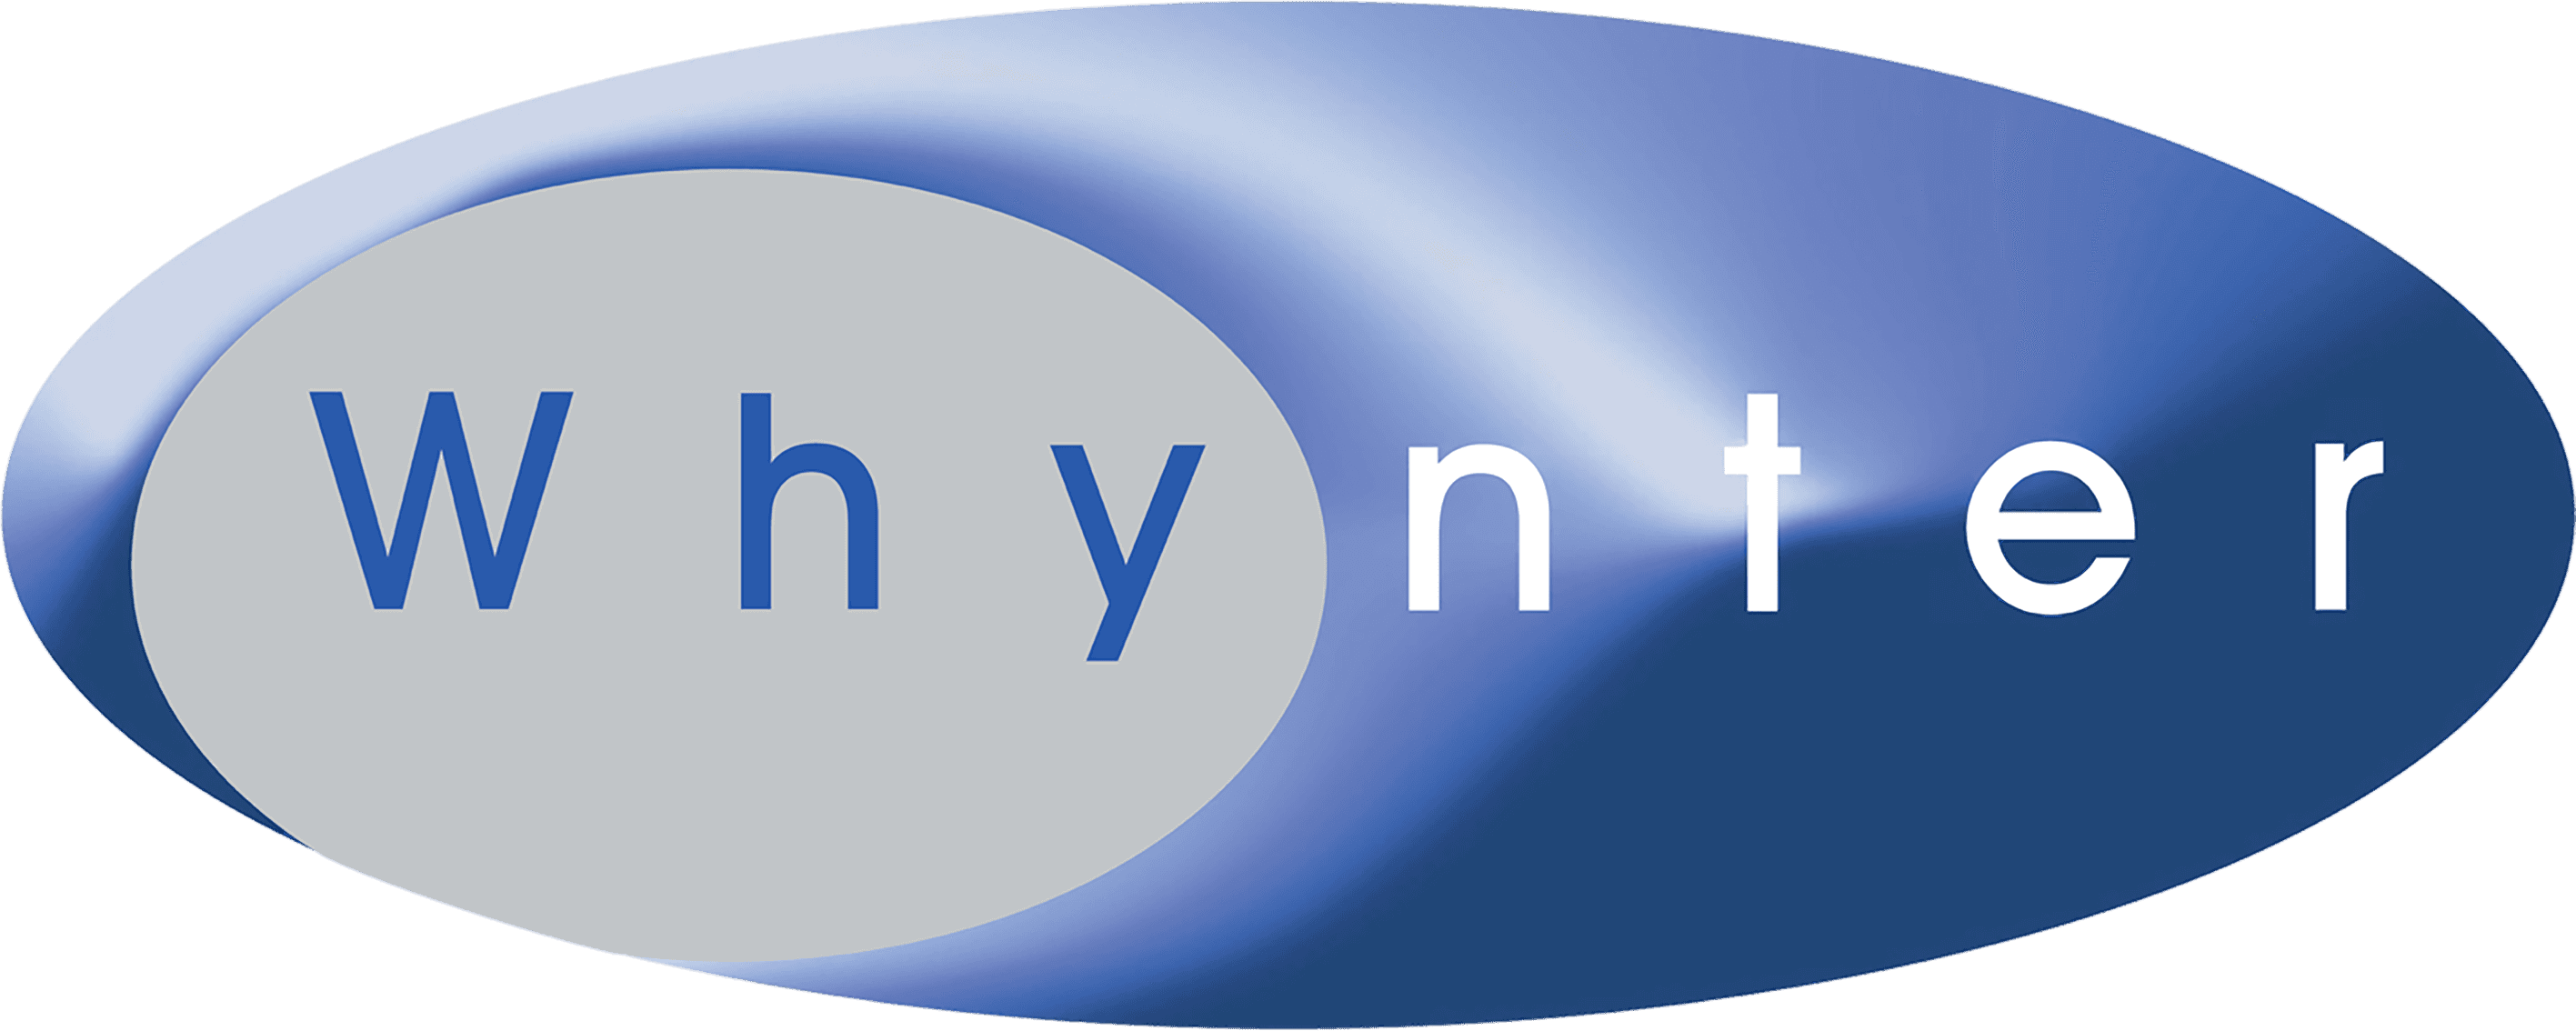 Whynter Logo